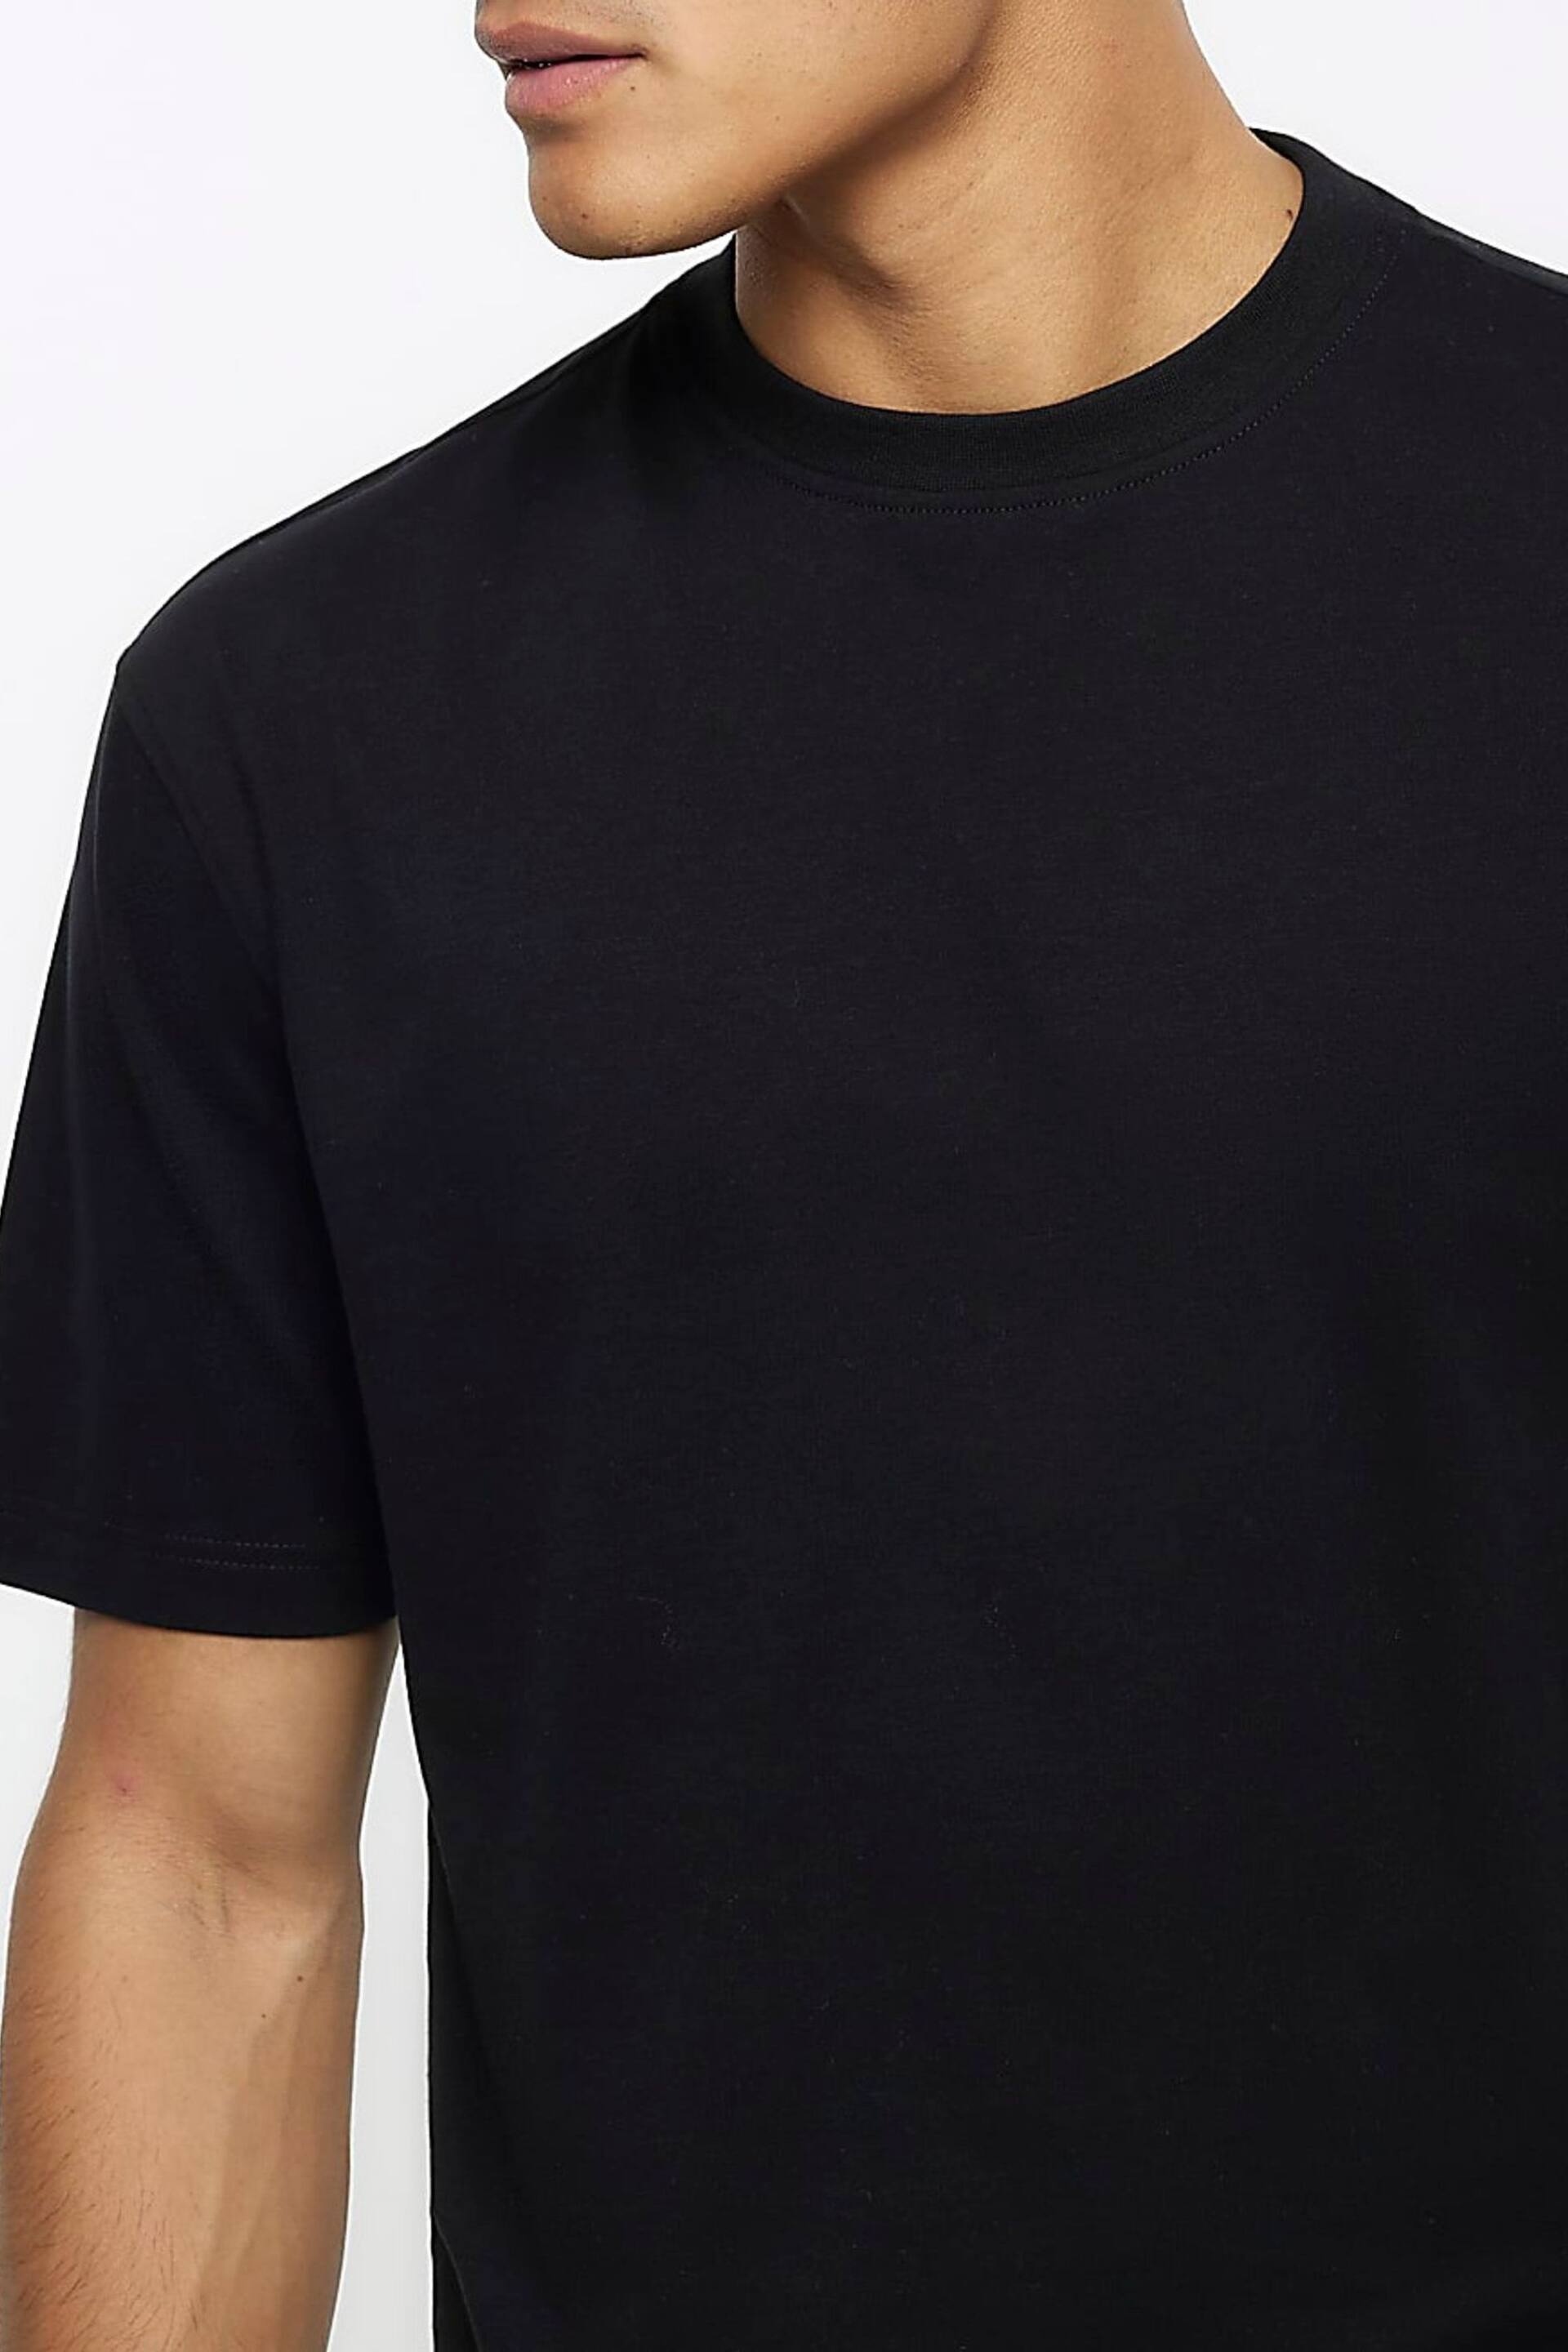 River Island Black Regular Fit T-Shirt - Image 4 of 6